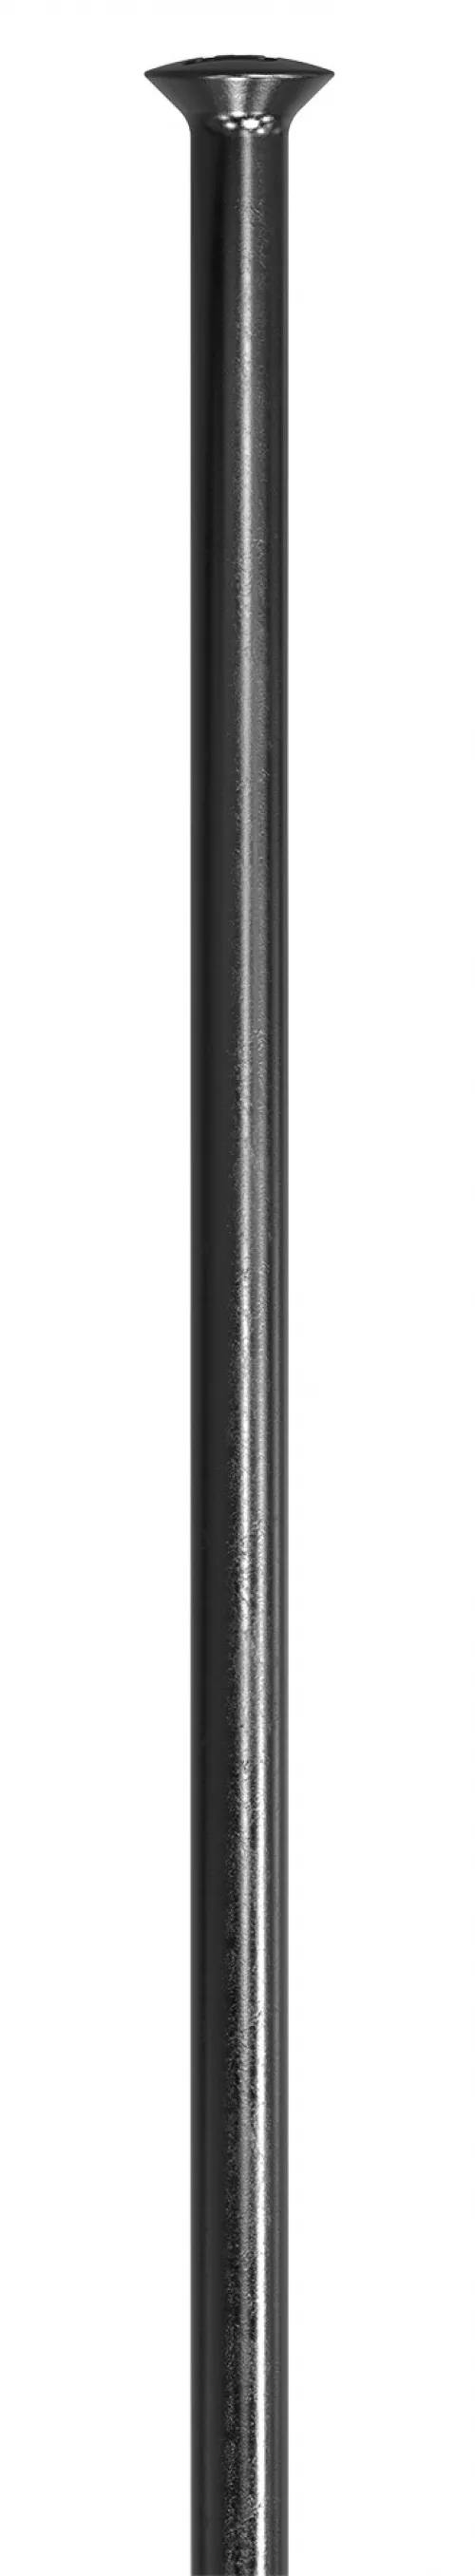 Спицы DT Swiss Сhampion (Straightpull) 2.0mm x 282mm black 100шт